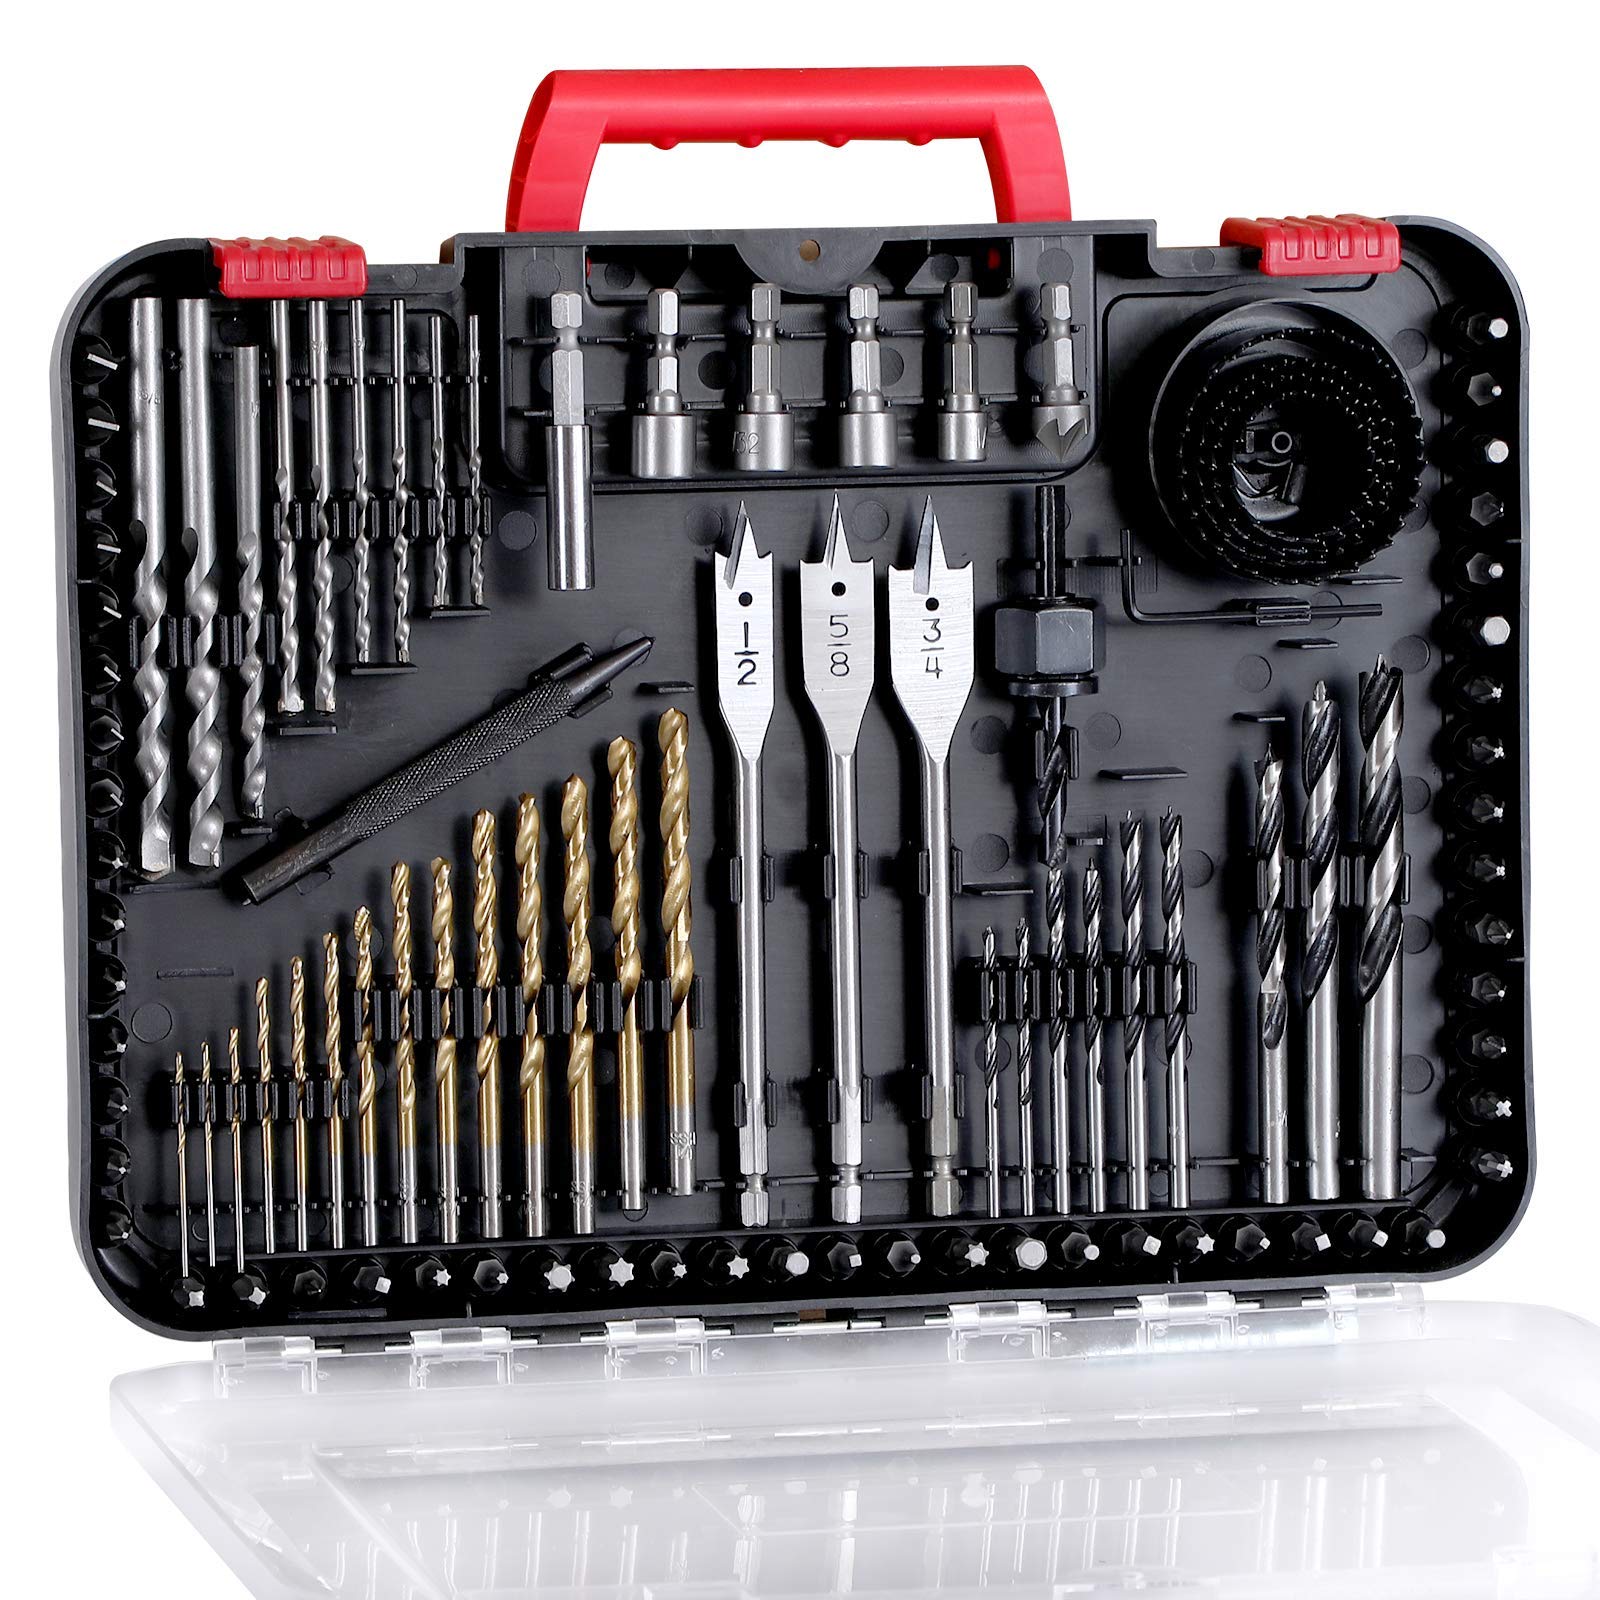 AVID POWER 12V Cordless Drill Set Bundle with 100PCS Drill Bits for Metal, Wood, Masonry